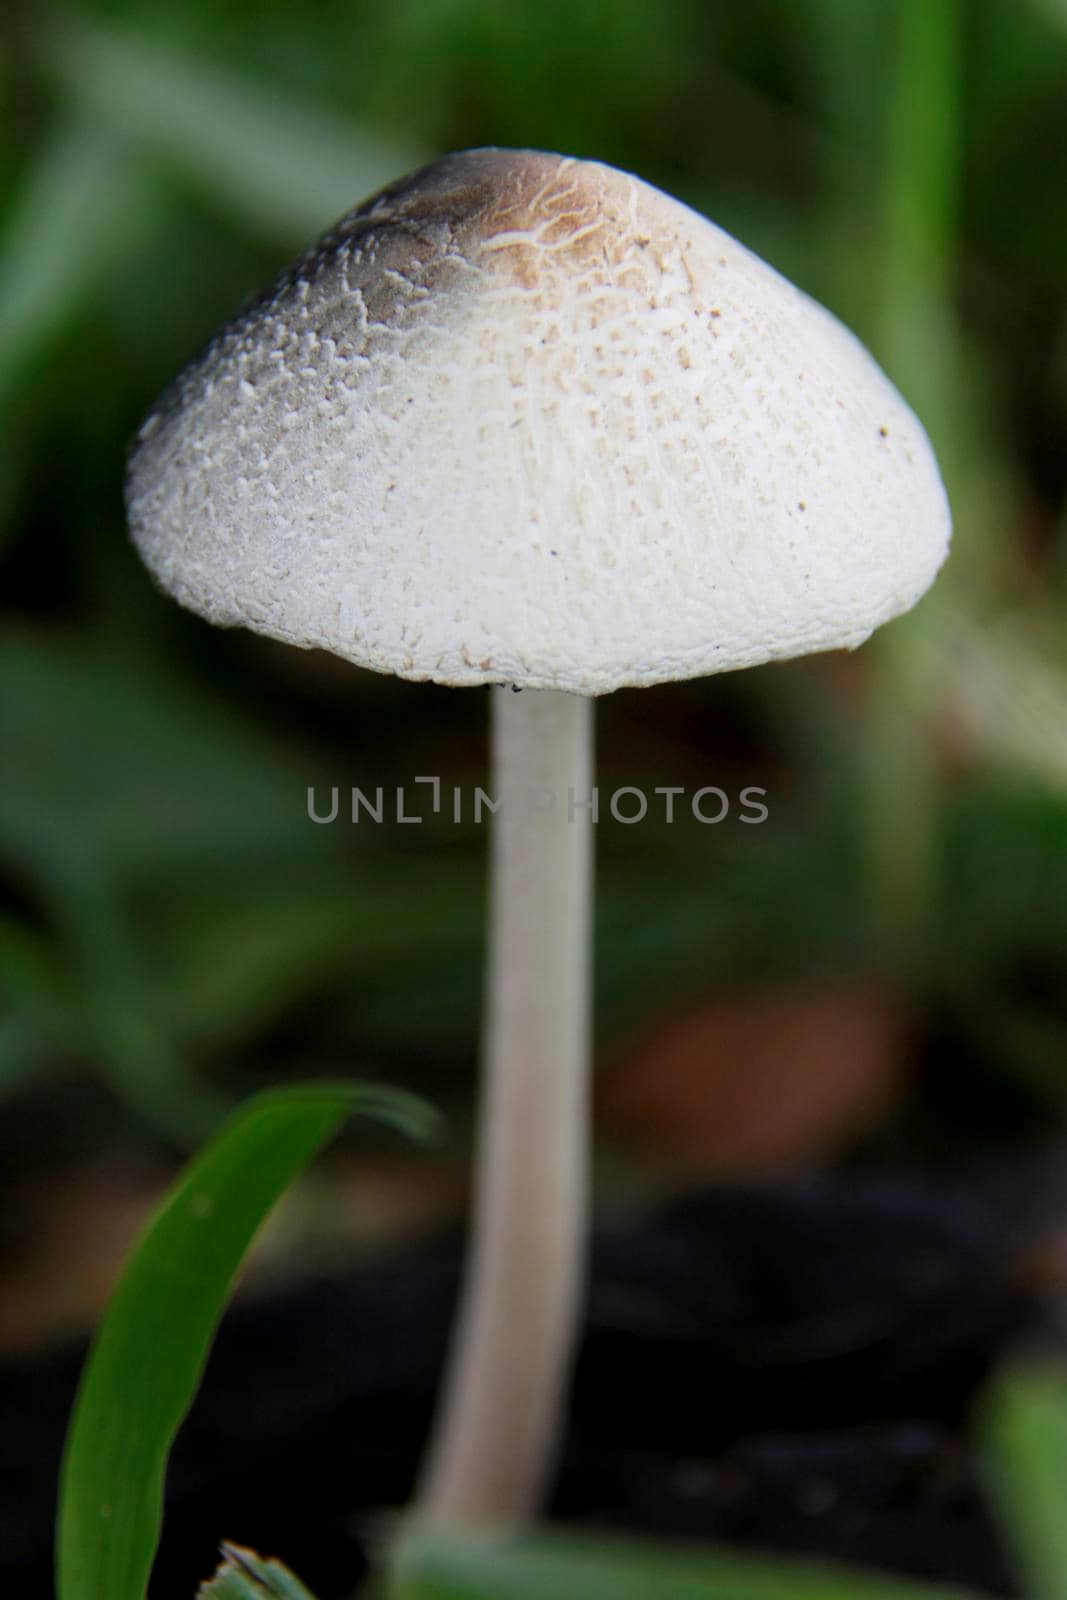 salvador, bahia / brazil - december 24, 2014: Mushroom fungus is seen in a garden in the city of Salvador.